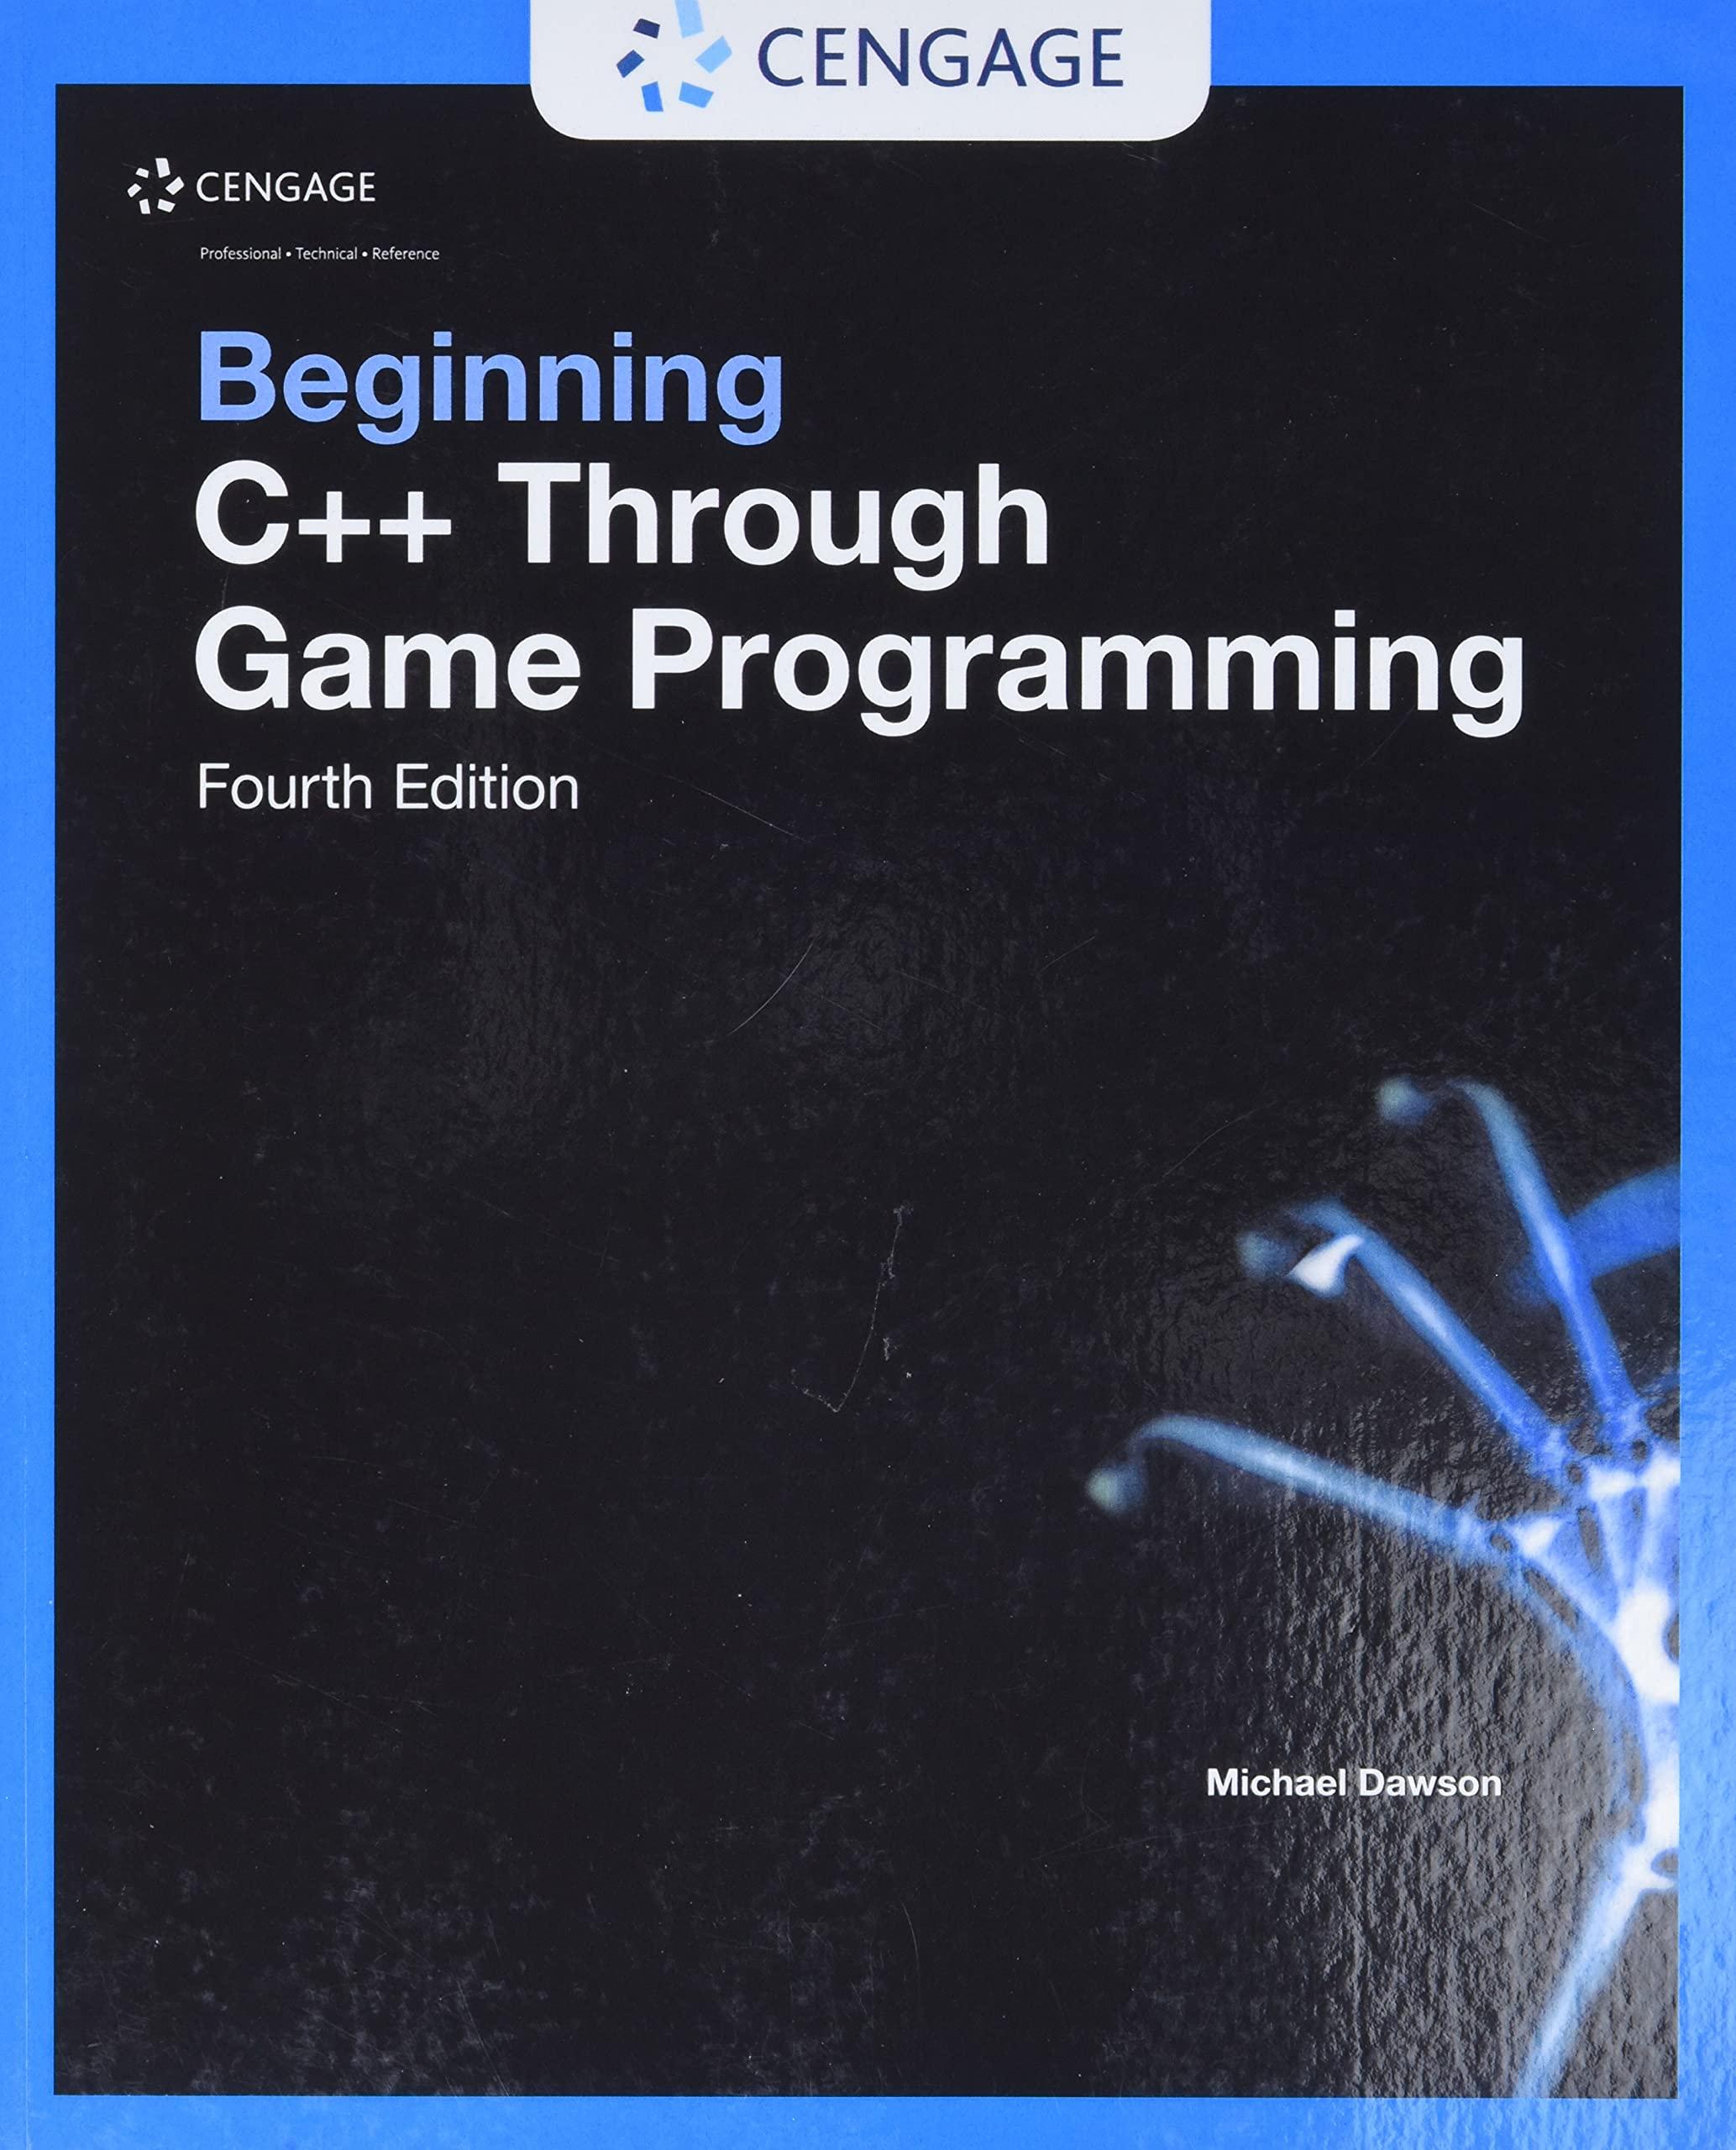 beginning c++ through game programming 4th edition michael dawson 1305109910, 978-1305109919